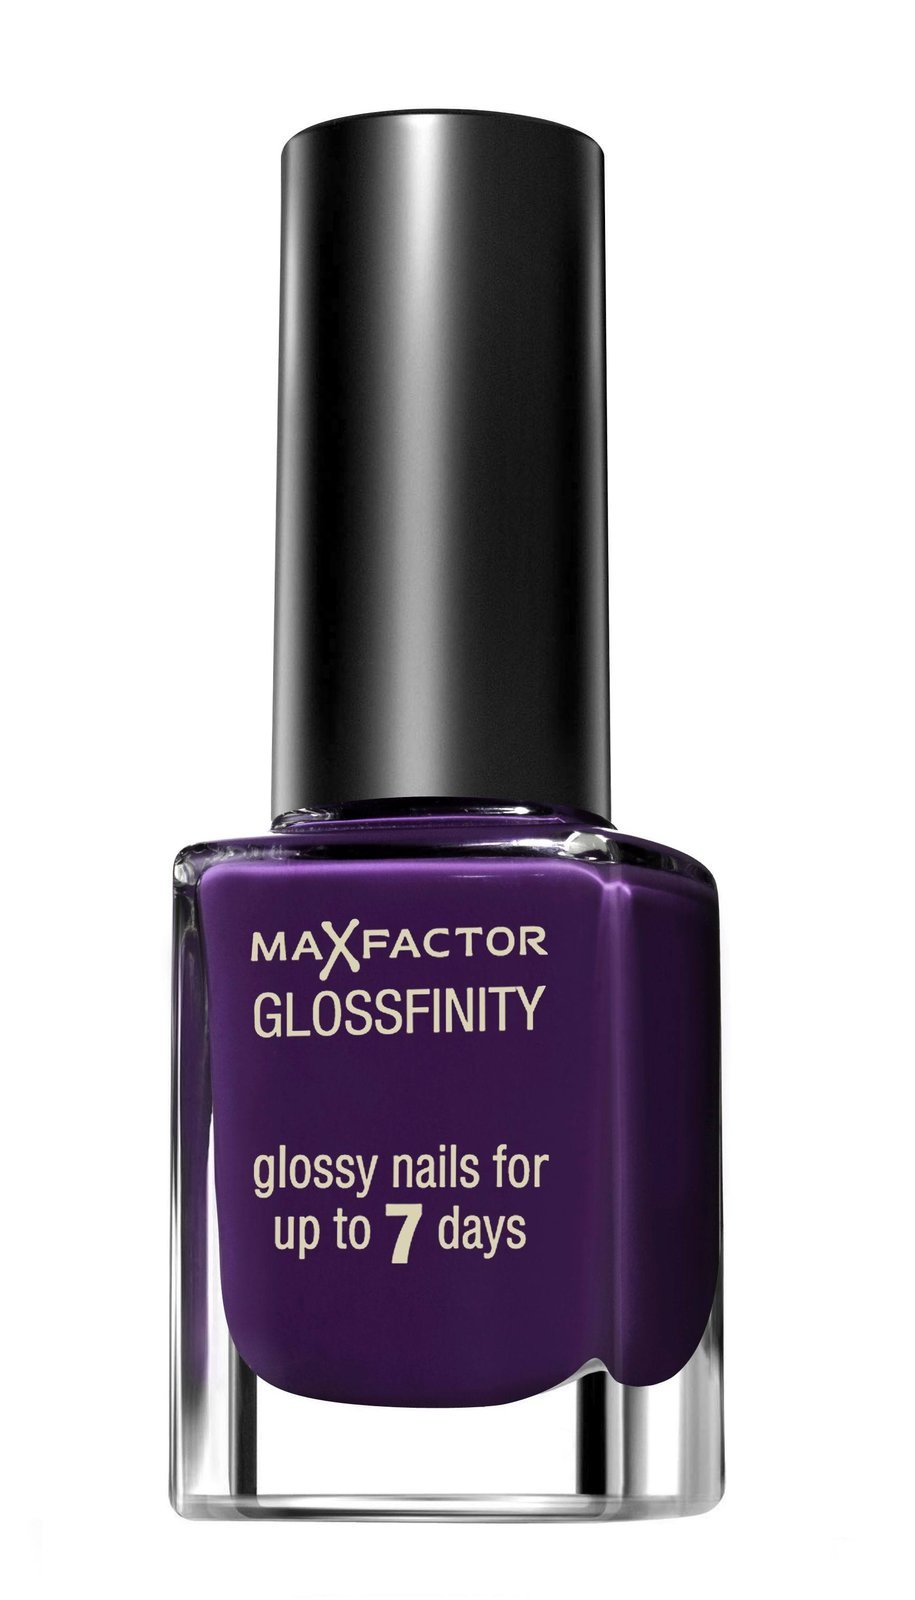 Lak na nehty Glossfinity, odstín Amethyst, Max Factor, info o ceně v síti parfumerií.